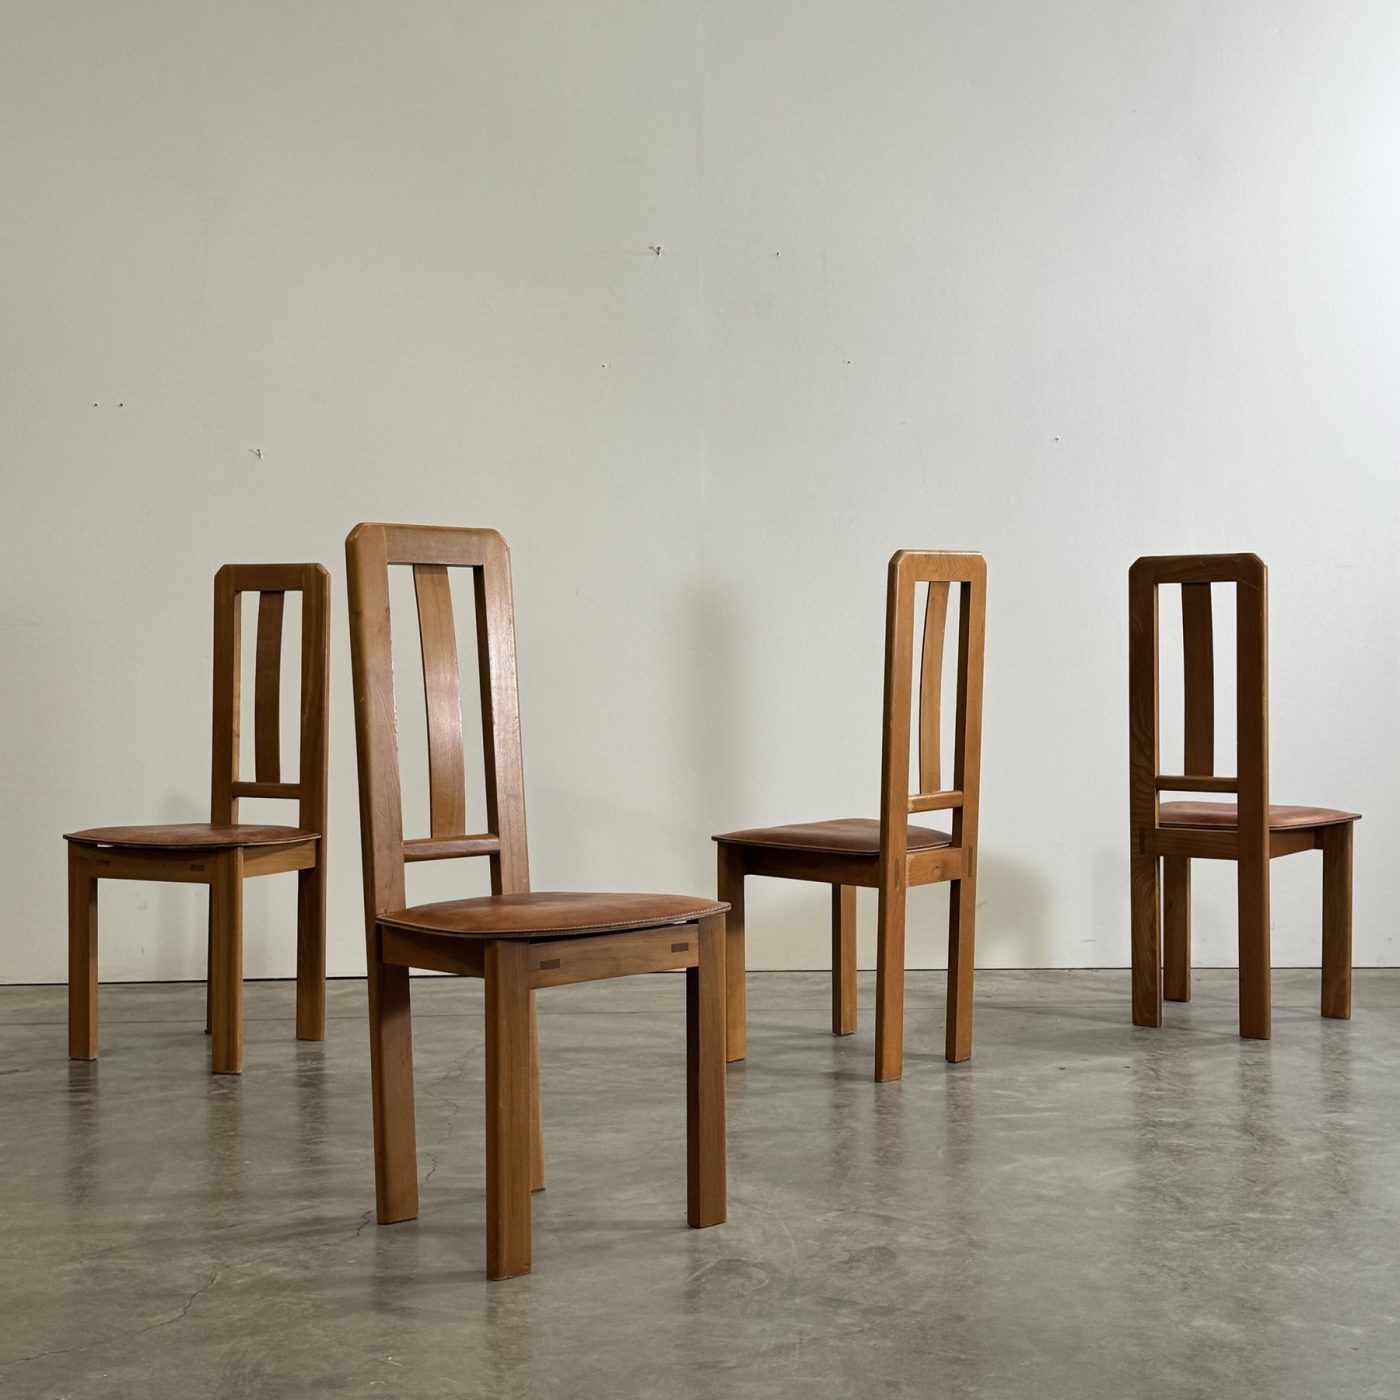 objet-vagabond-elm-chairs0000